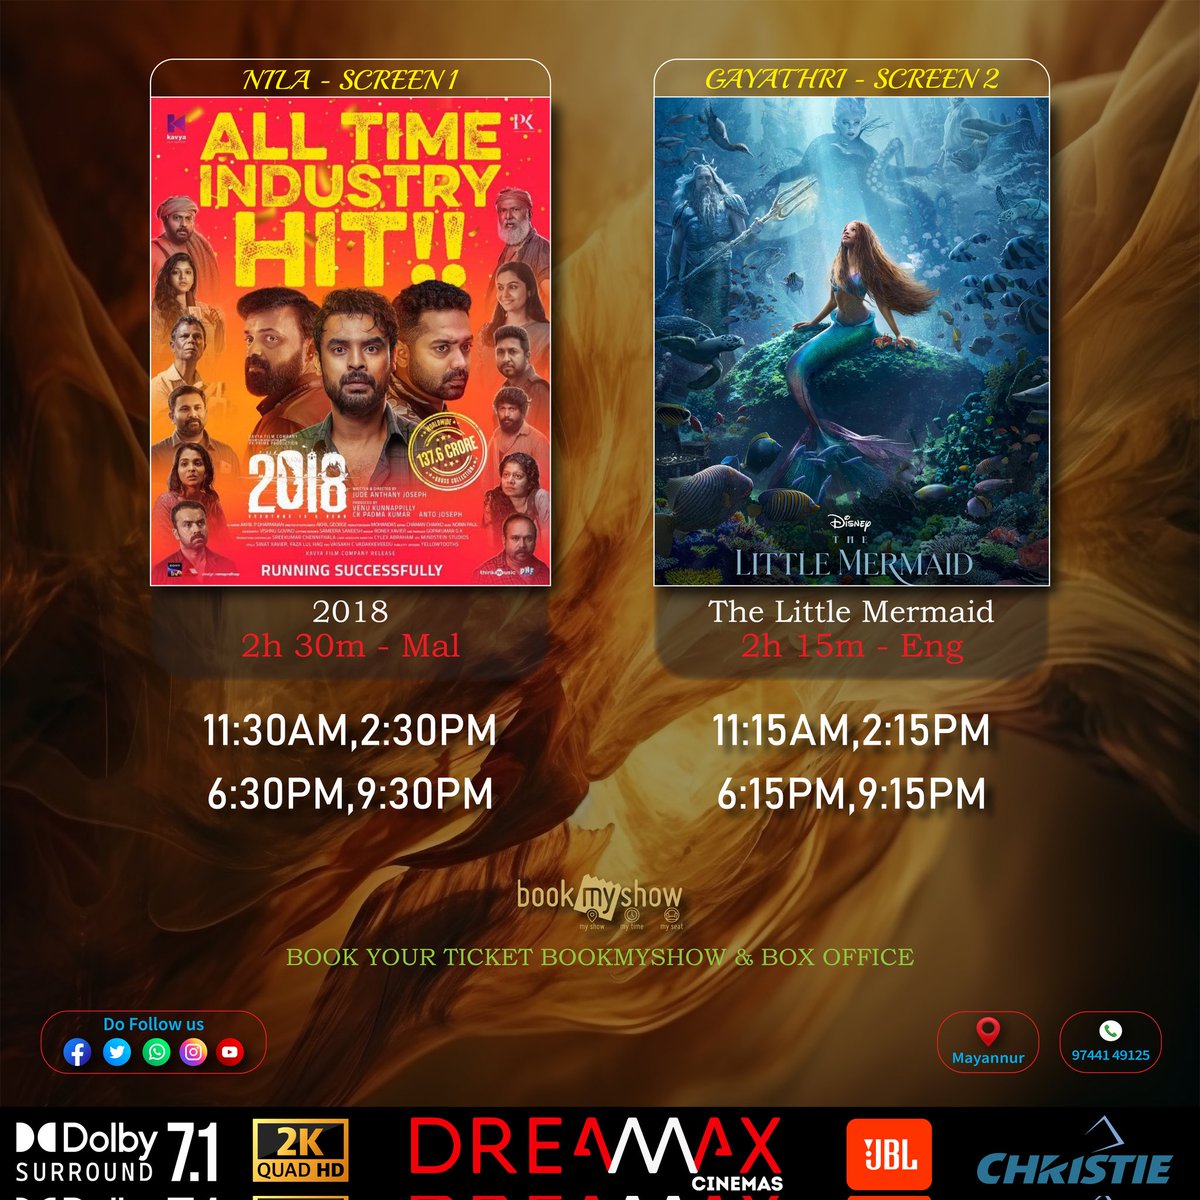 Show time at Dreamax Cinemas

 #2018EveryoneIsAHero 

#2018movie #KeralaFloods  #JudeAnthanyJoseph #VenuKunnappilly #AntoJoseph #KavyaFilmCompany  #TovinoThomas #AsifAli #KunchackoBoban #Sshivada #VinithaKoshy #VineethSreenivasan #Narain #Lal  #MalayalamCinema

#TheLittleMermaid